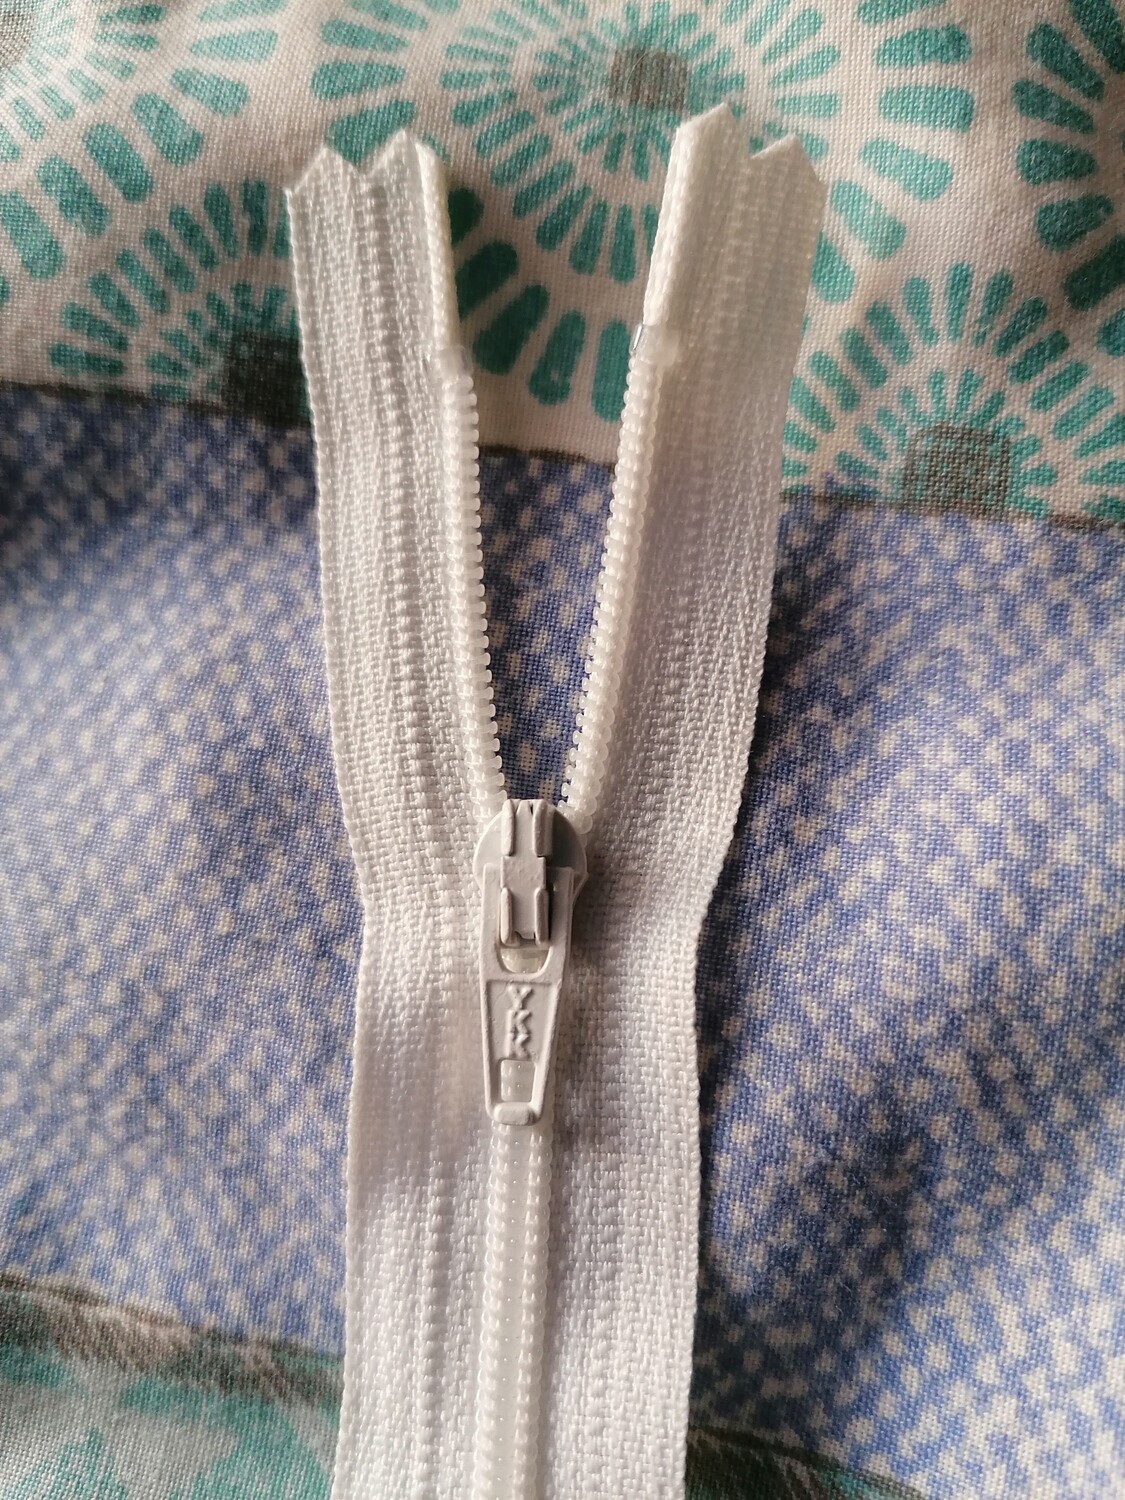 46cm (18") nylon closed end zip